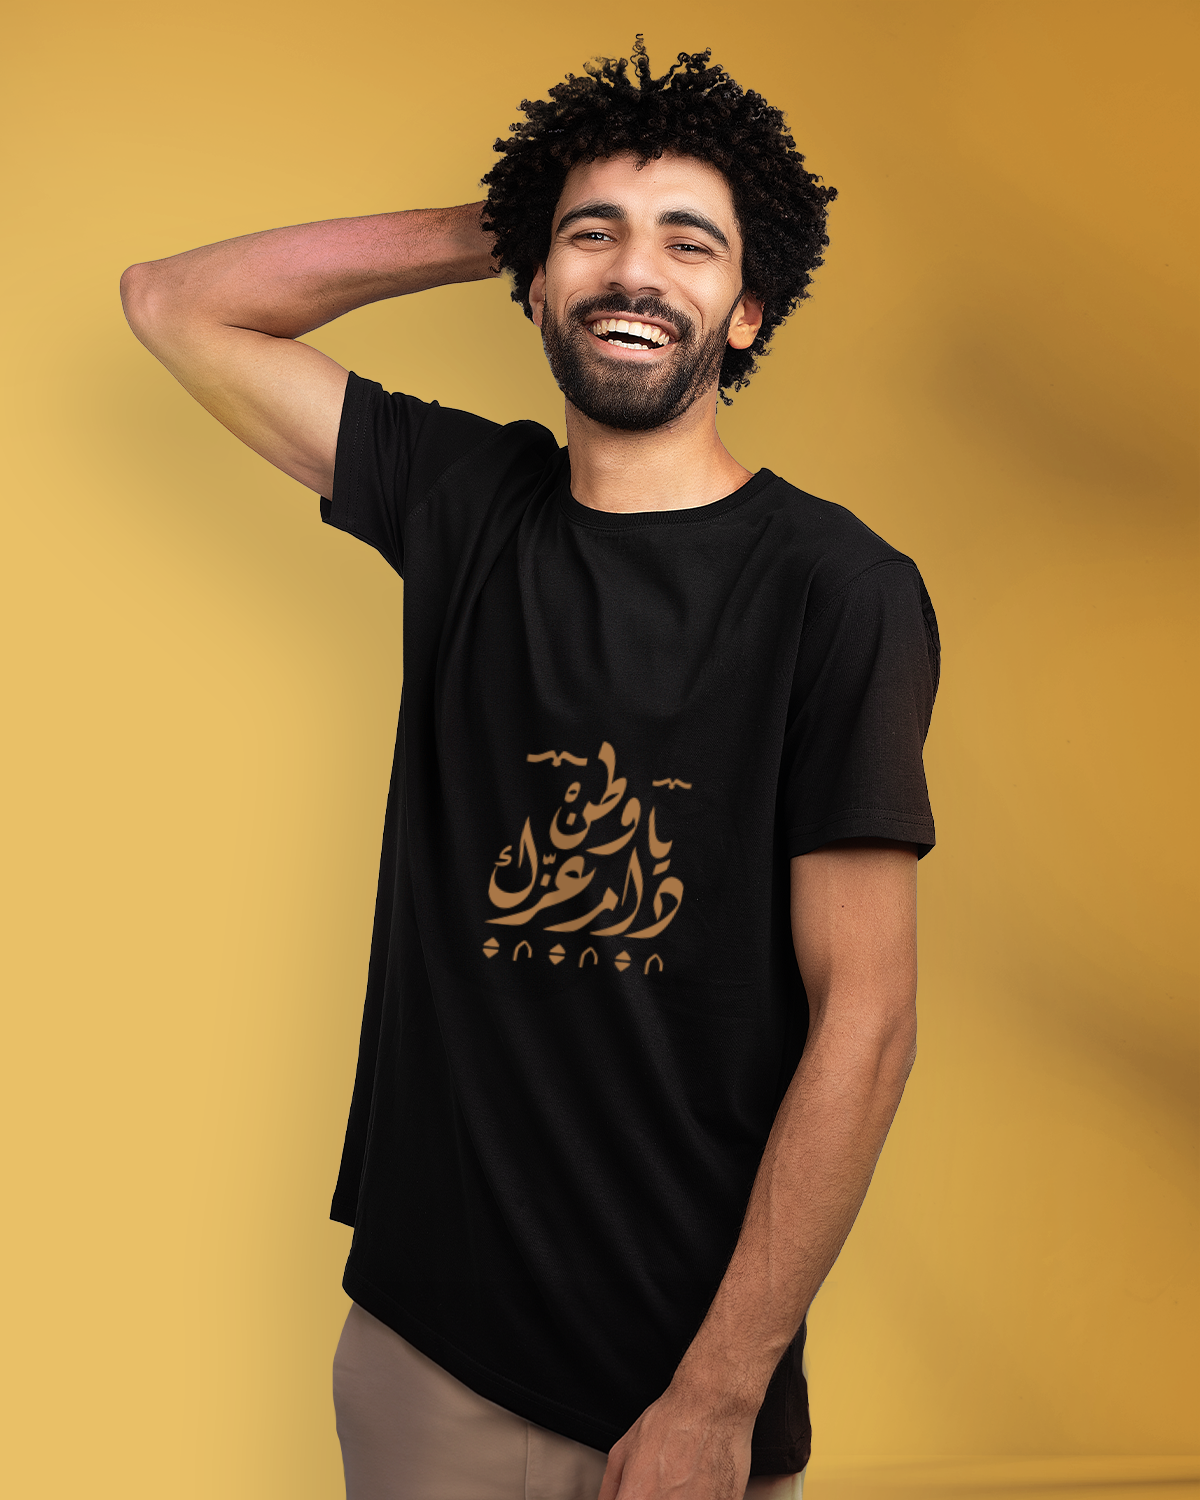 Men's Foundation Day T-shirt (Ya Watan Dam Eizk)